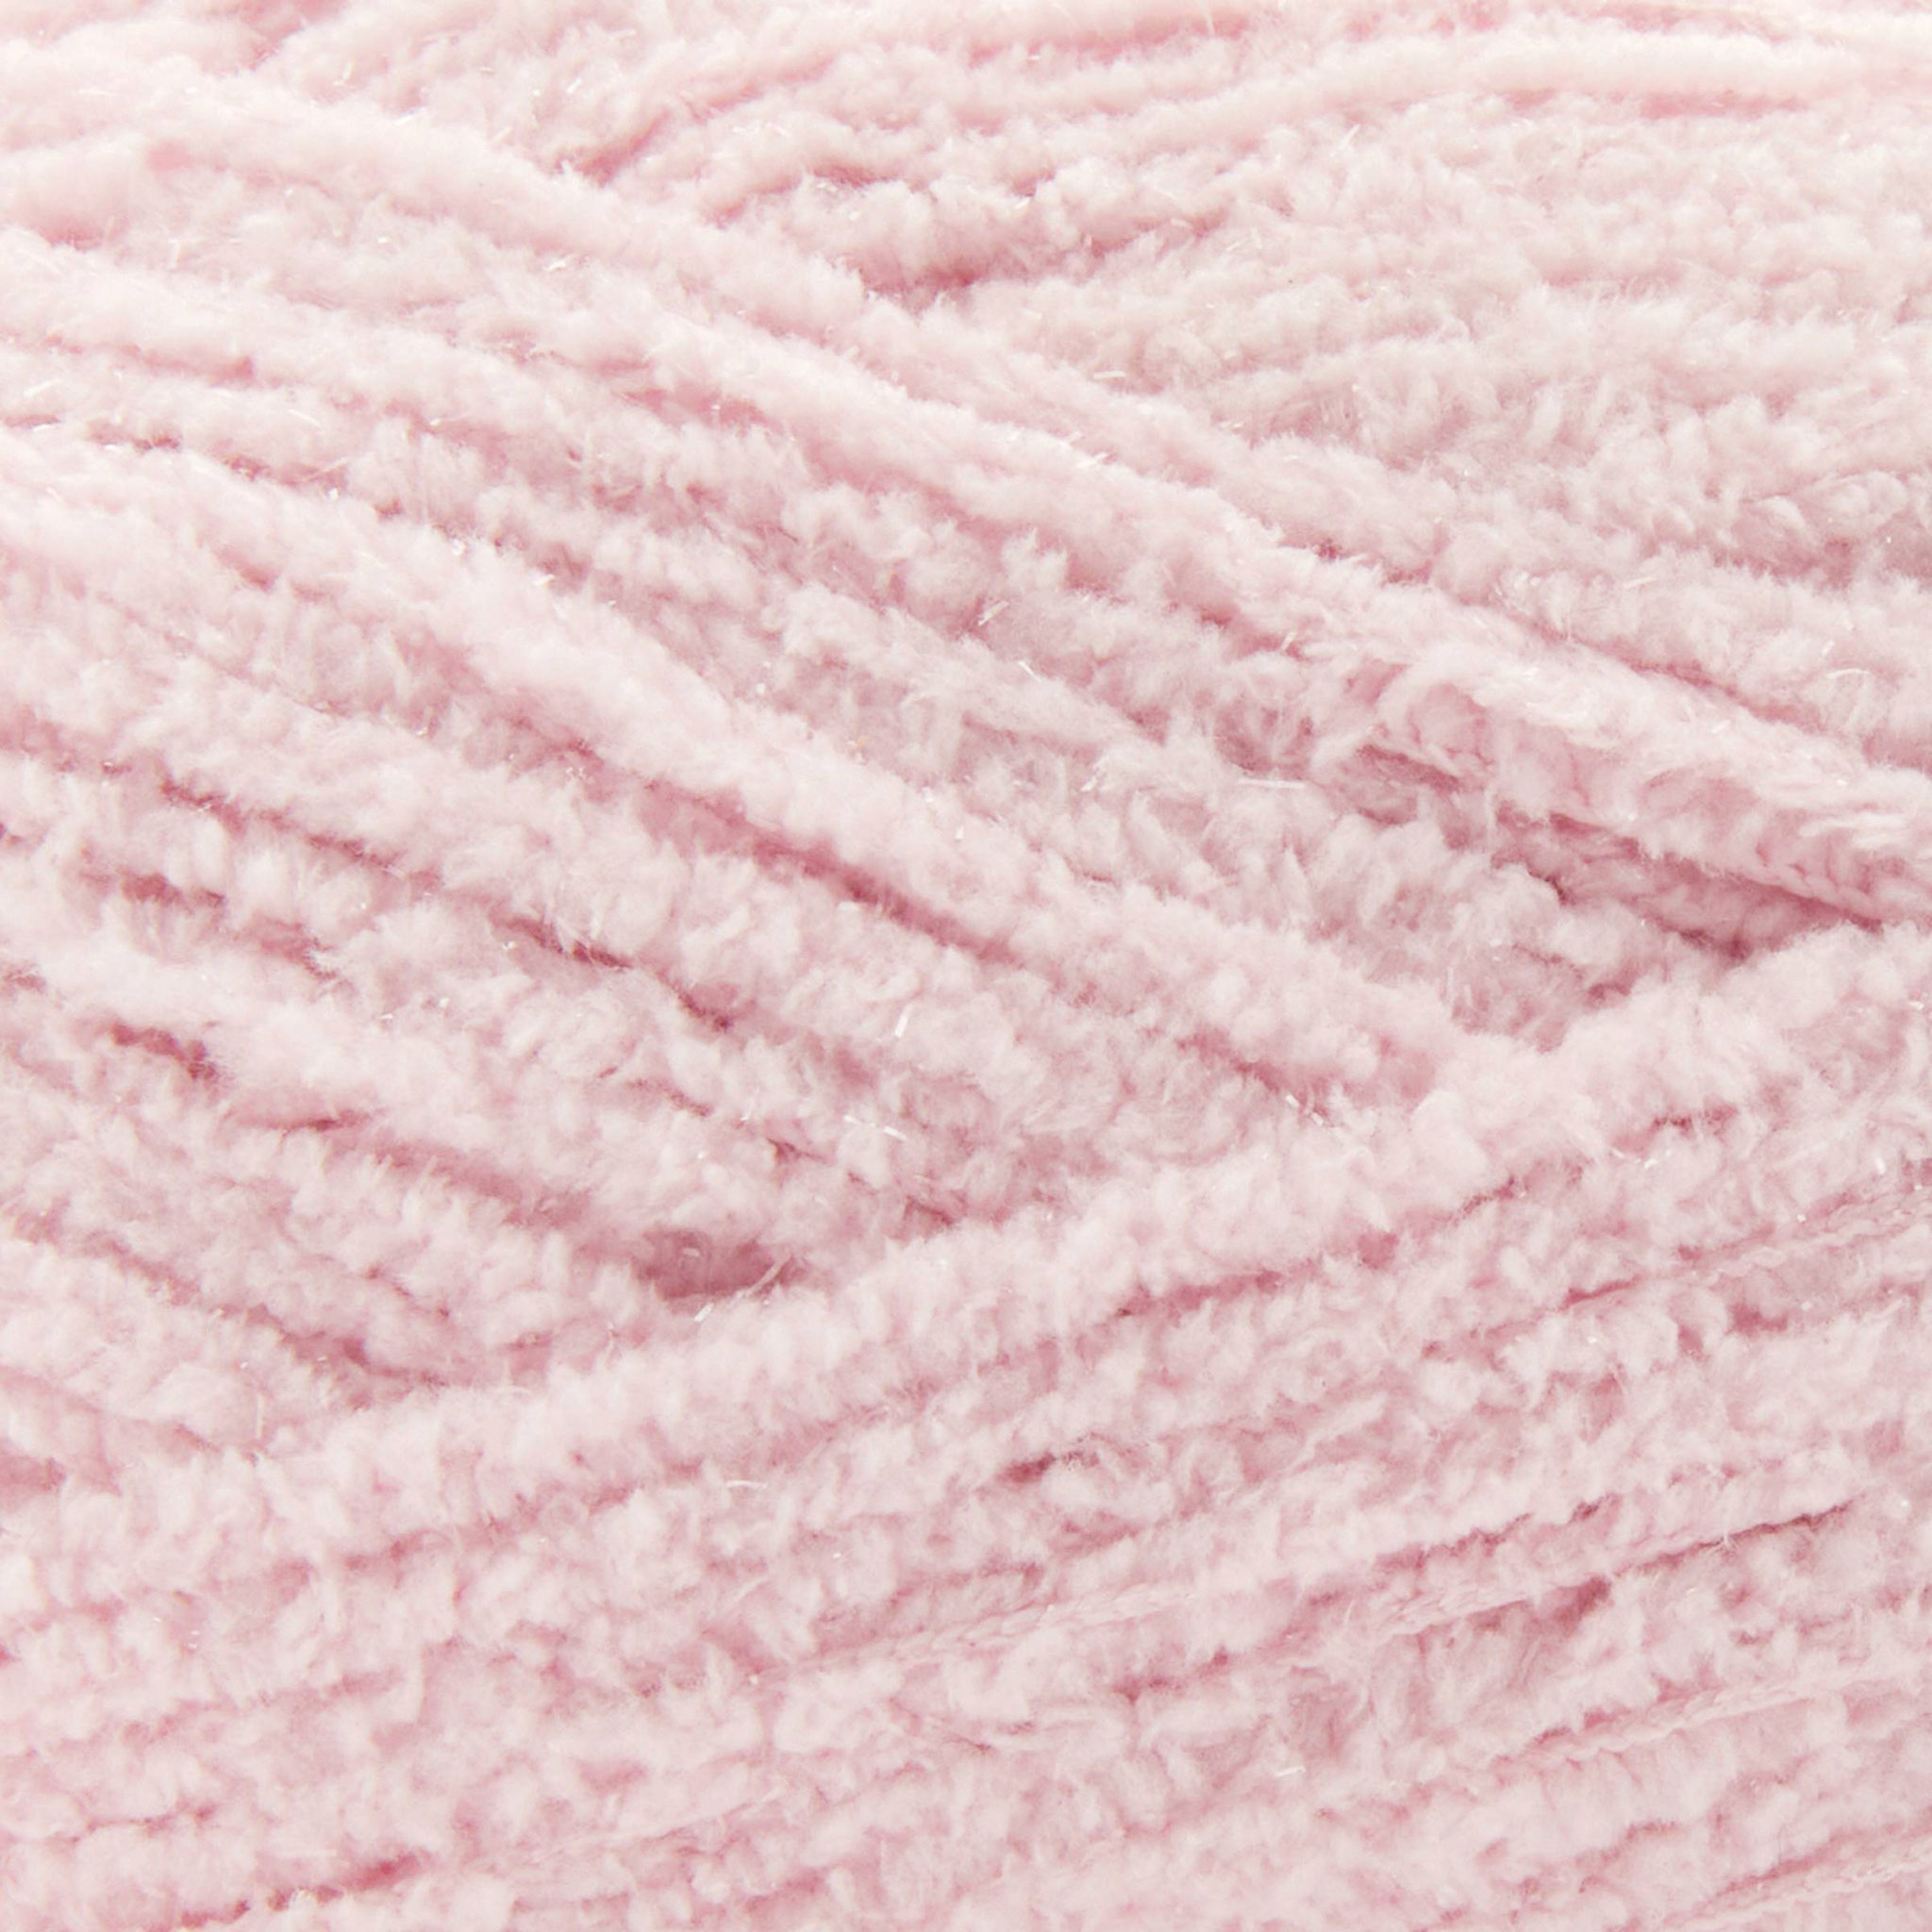 Premier Pixie Dust Brights Yarn-Fairy Pink